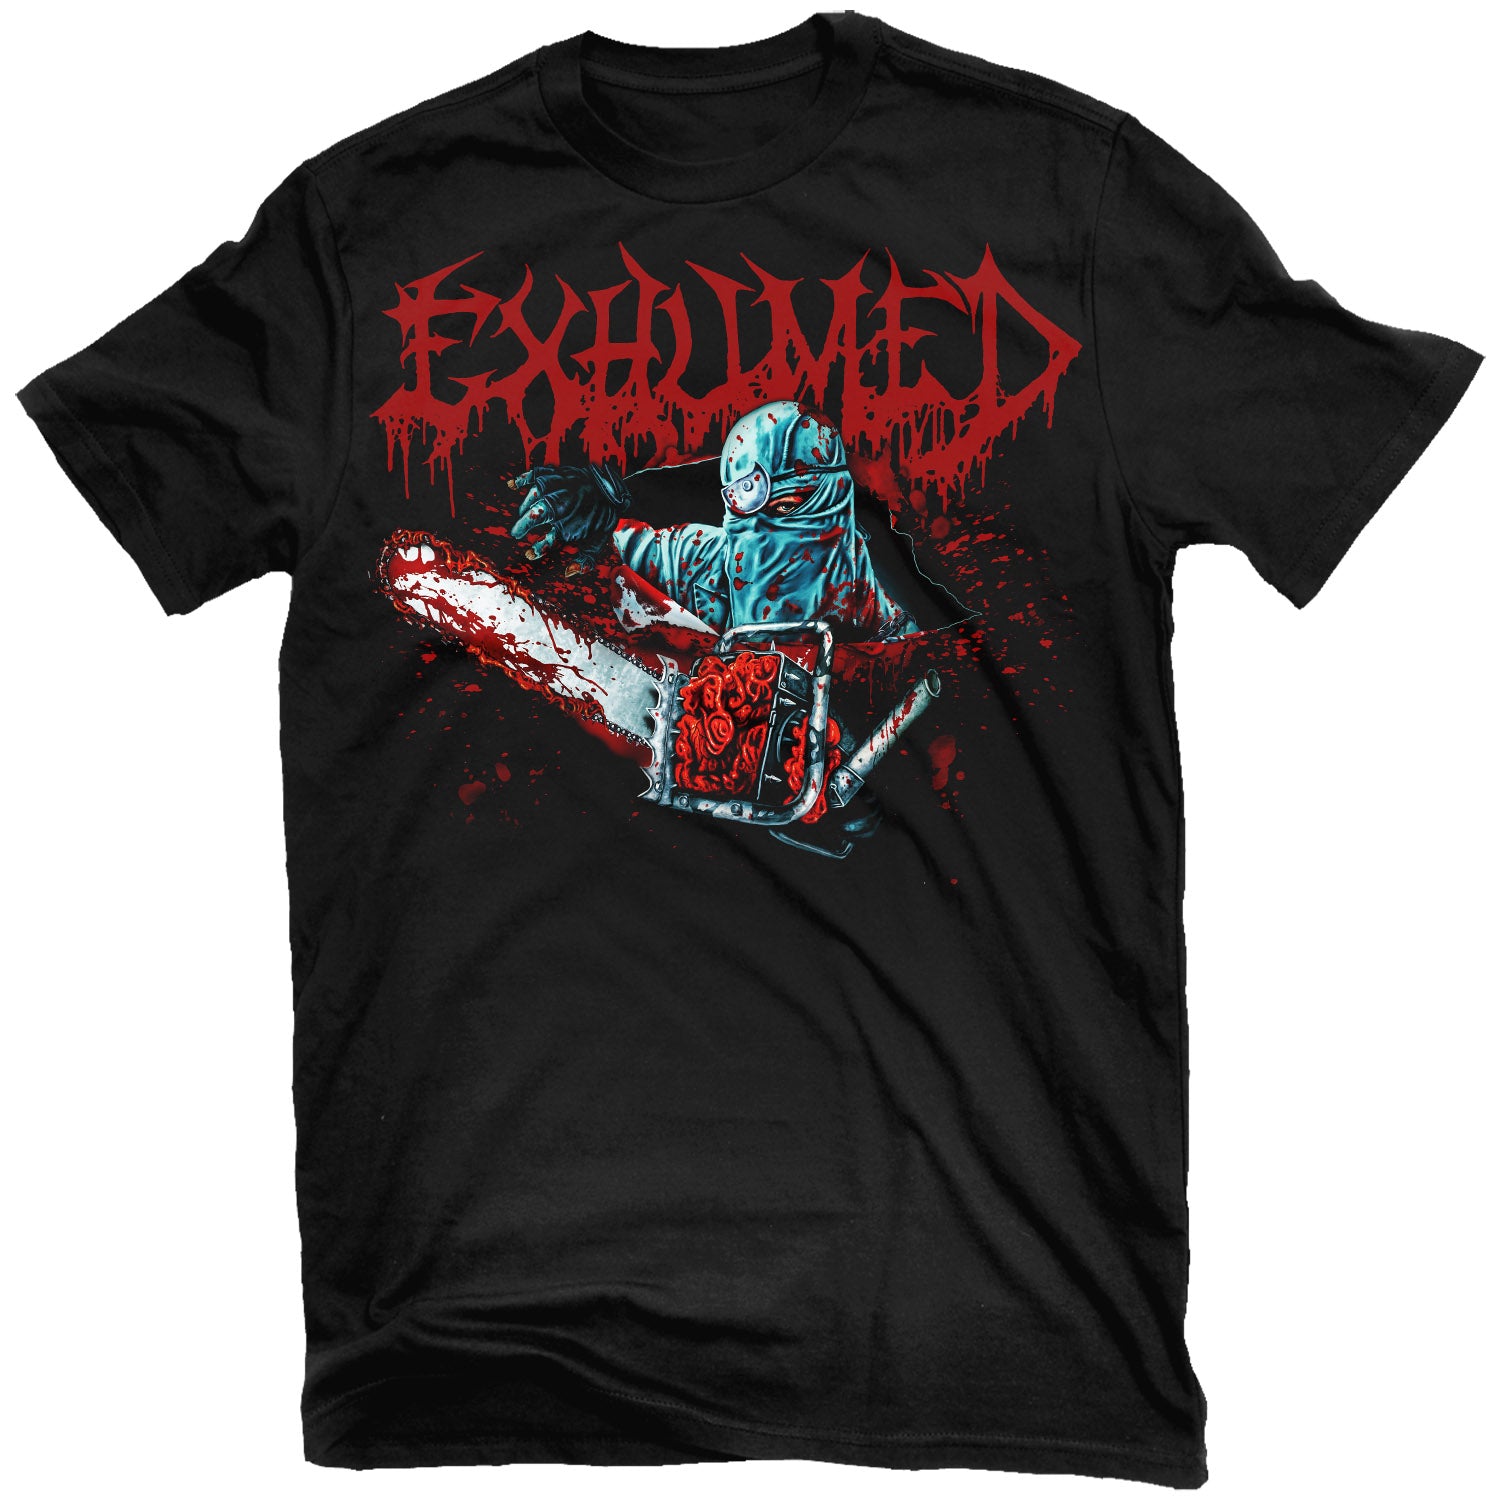 Exhumed "Horror" T-Shirt